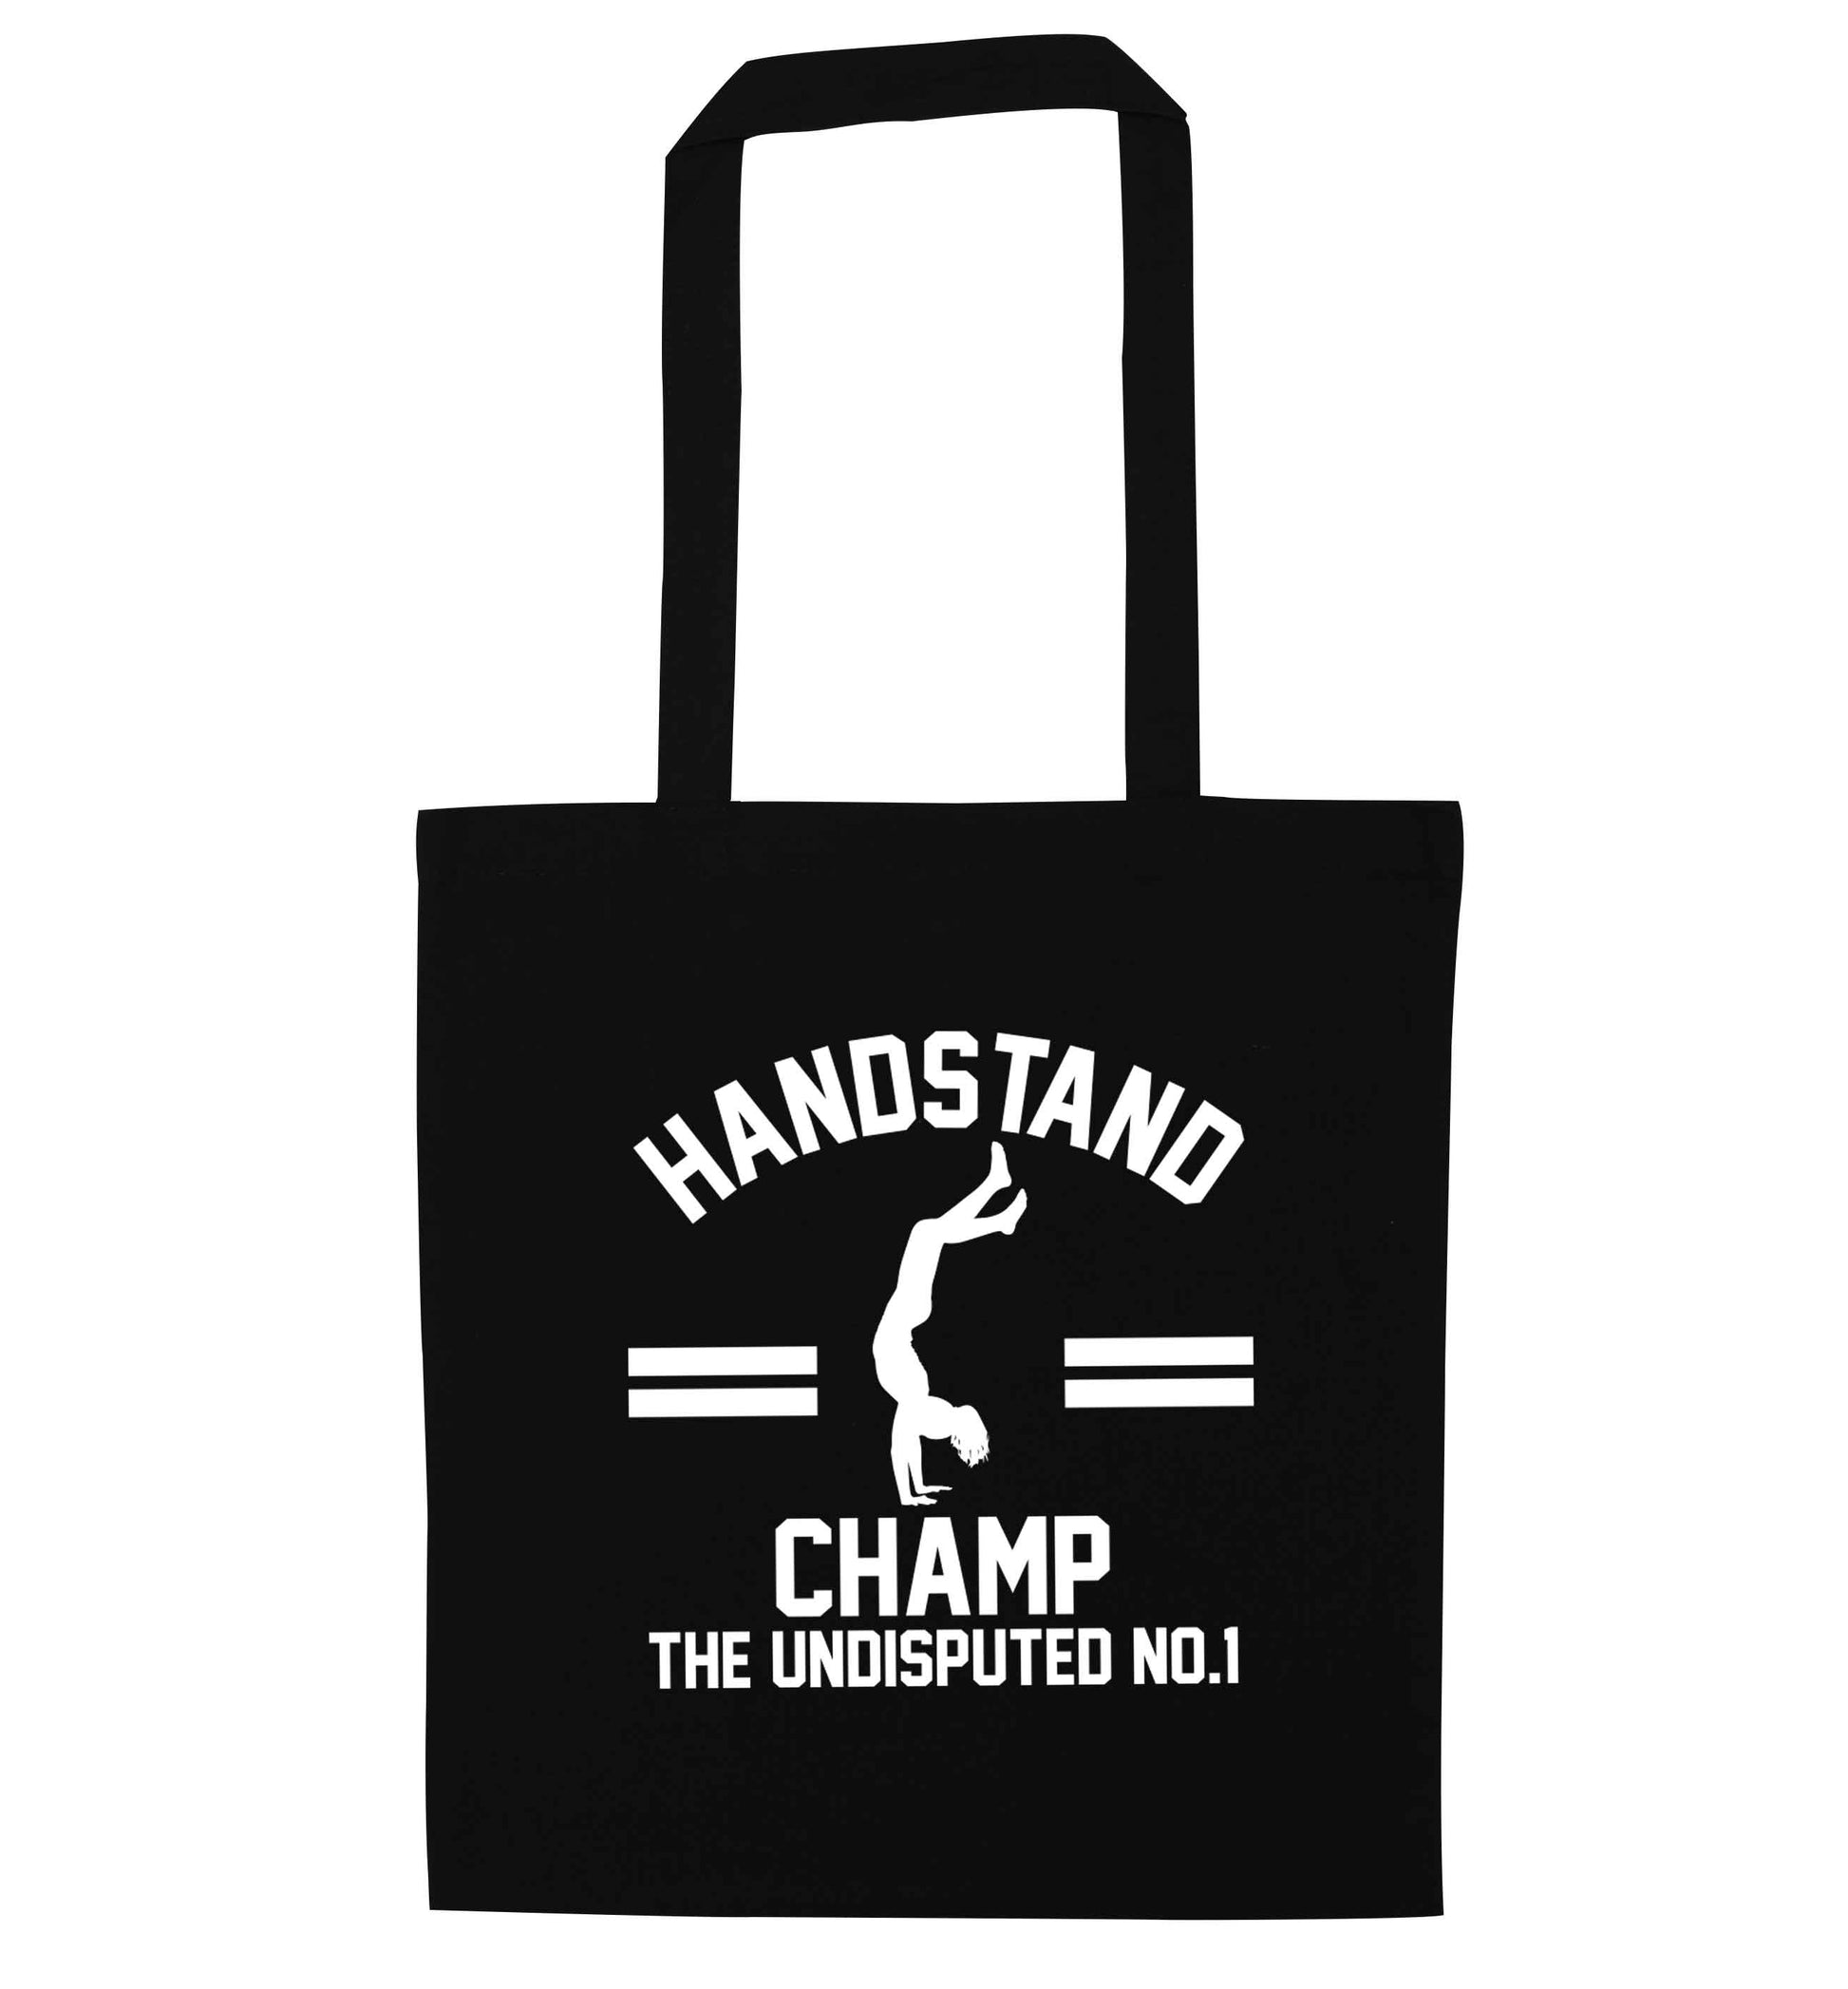 Undisputed handstand championship no.1  black tote bag